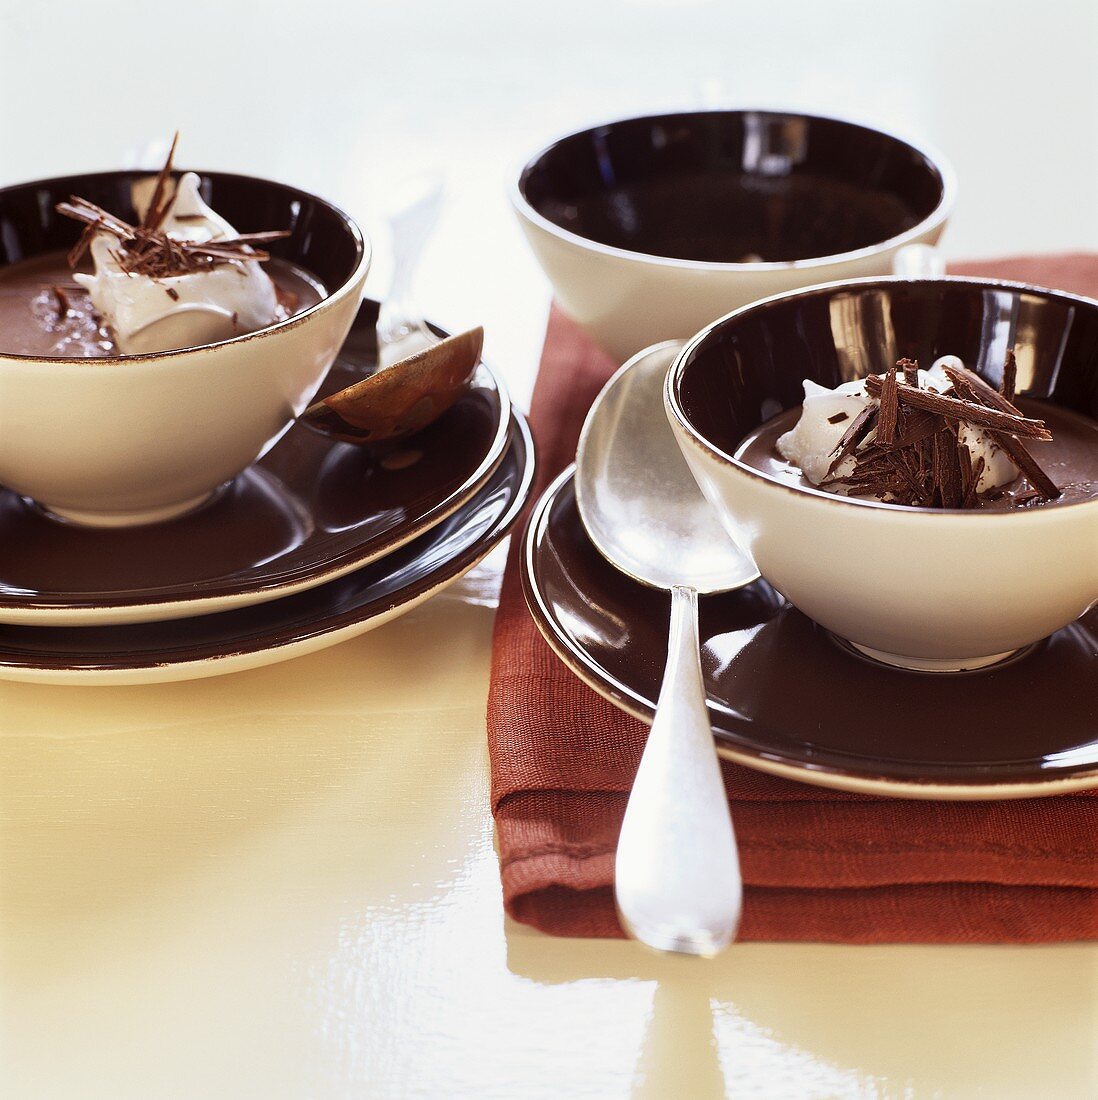 Chocolate soup